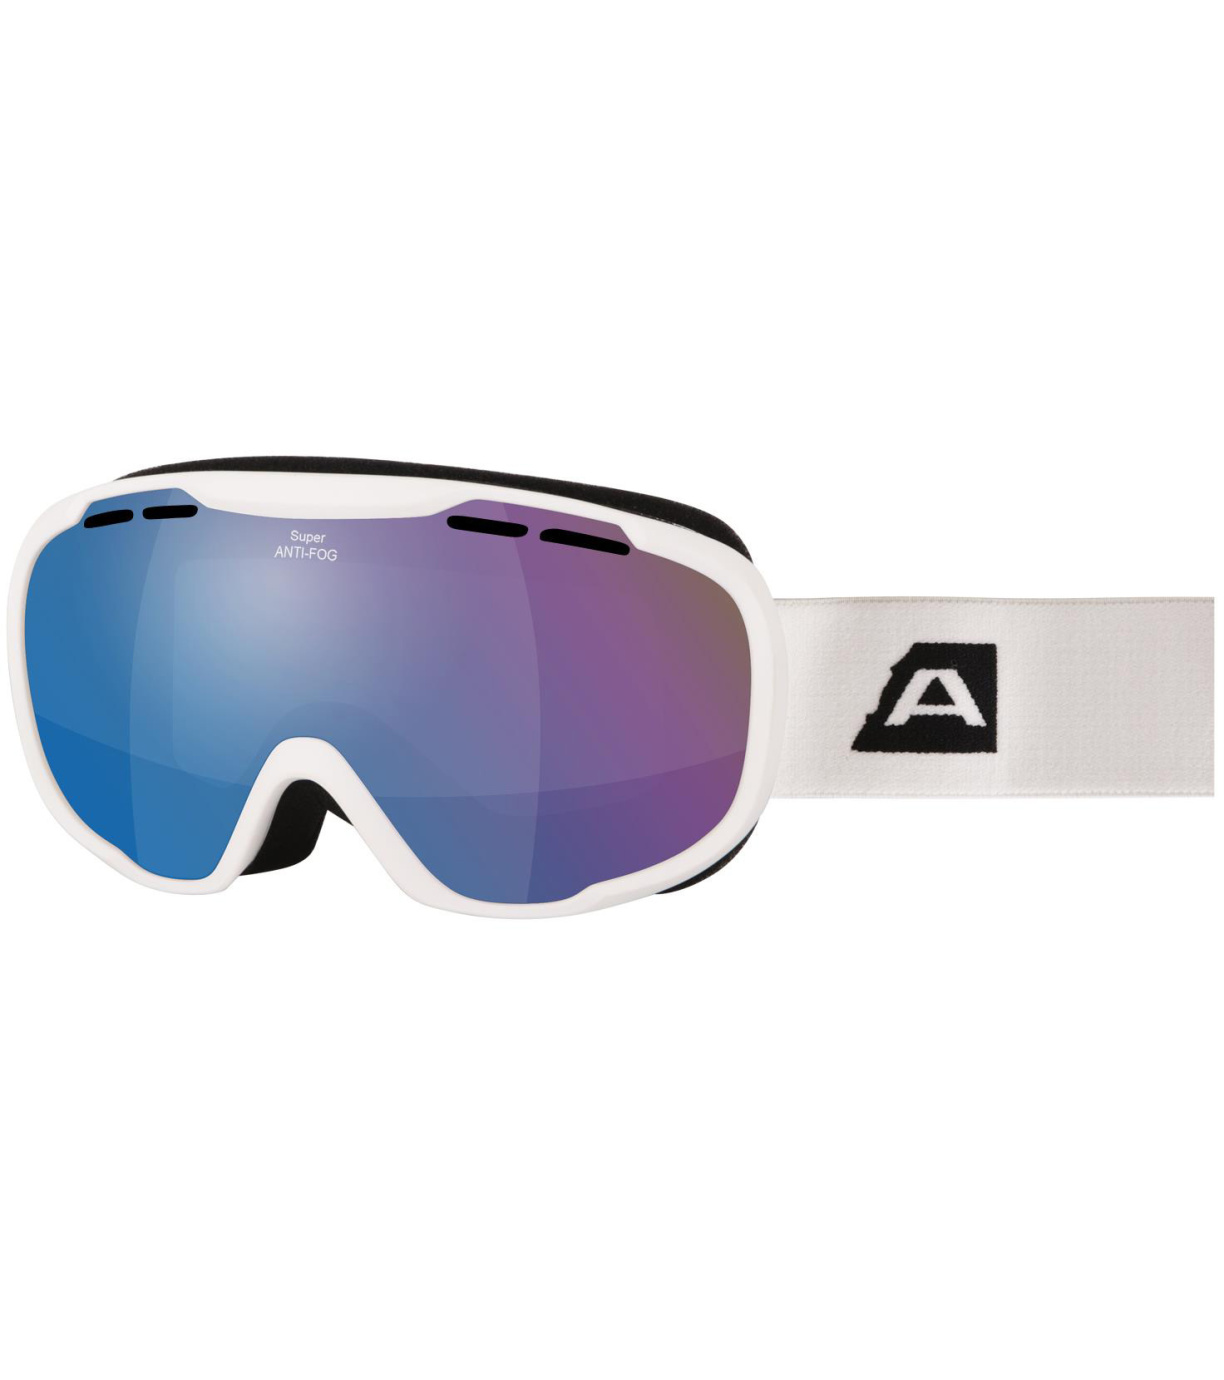 Unisex lyžařské brýle KEIRE ALPINE PRO bílá